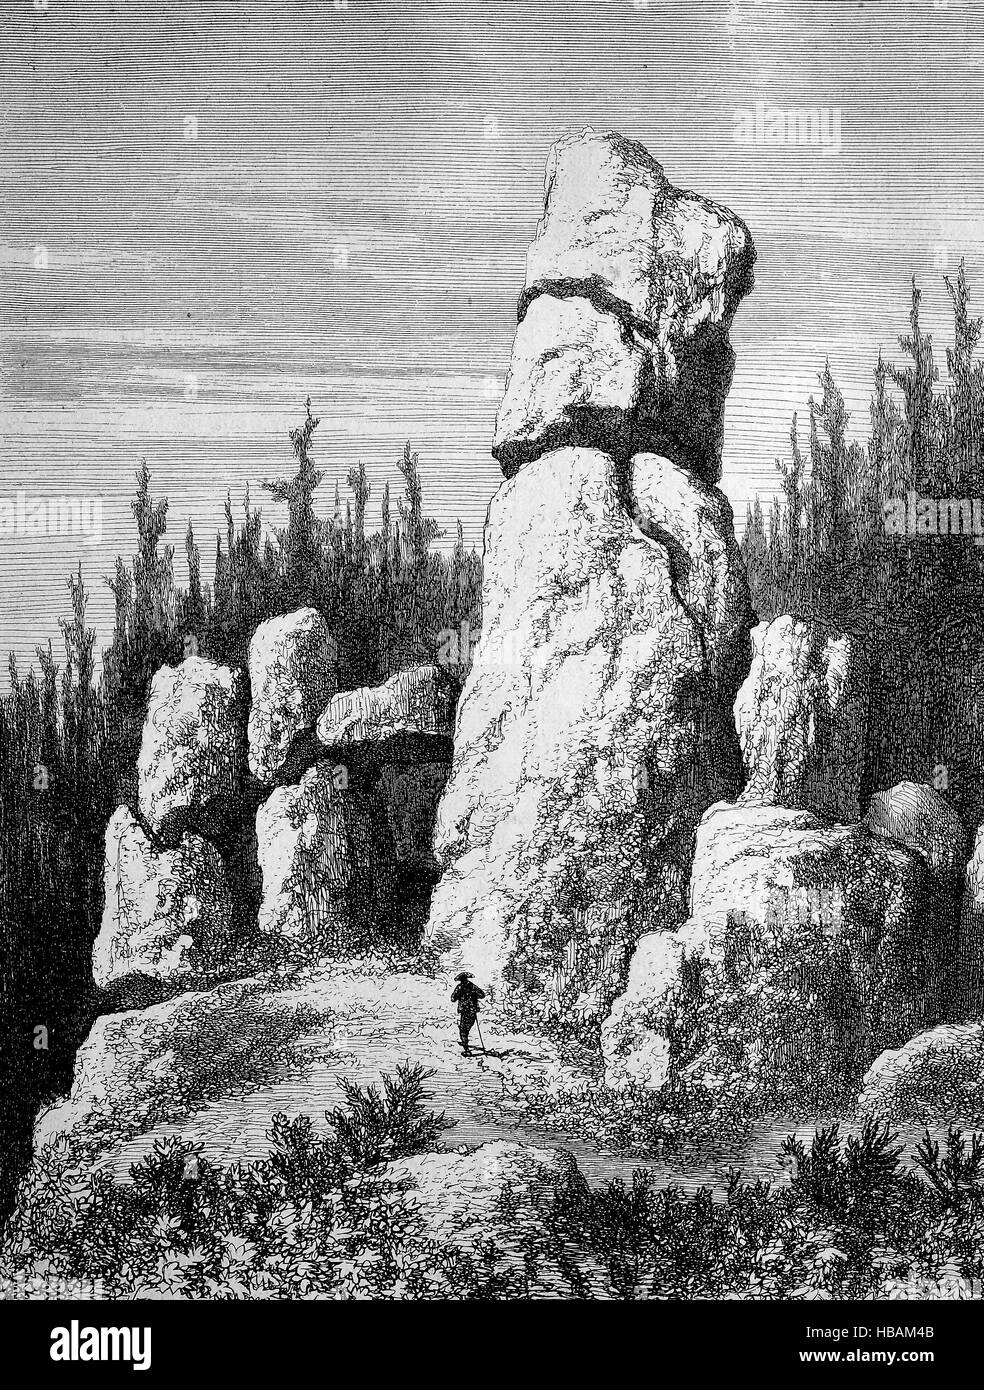 the rocks Ruessensteiner Felsen in the Blackwood, Black Forest, Germany, hictorical illustration from 1880 Stock Photo